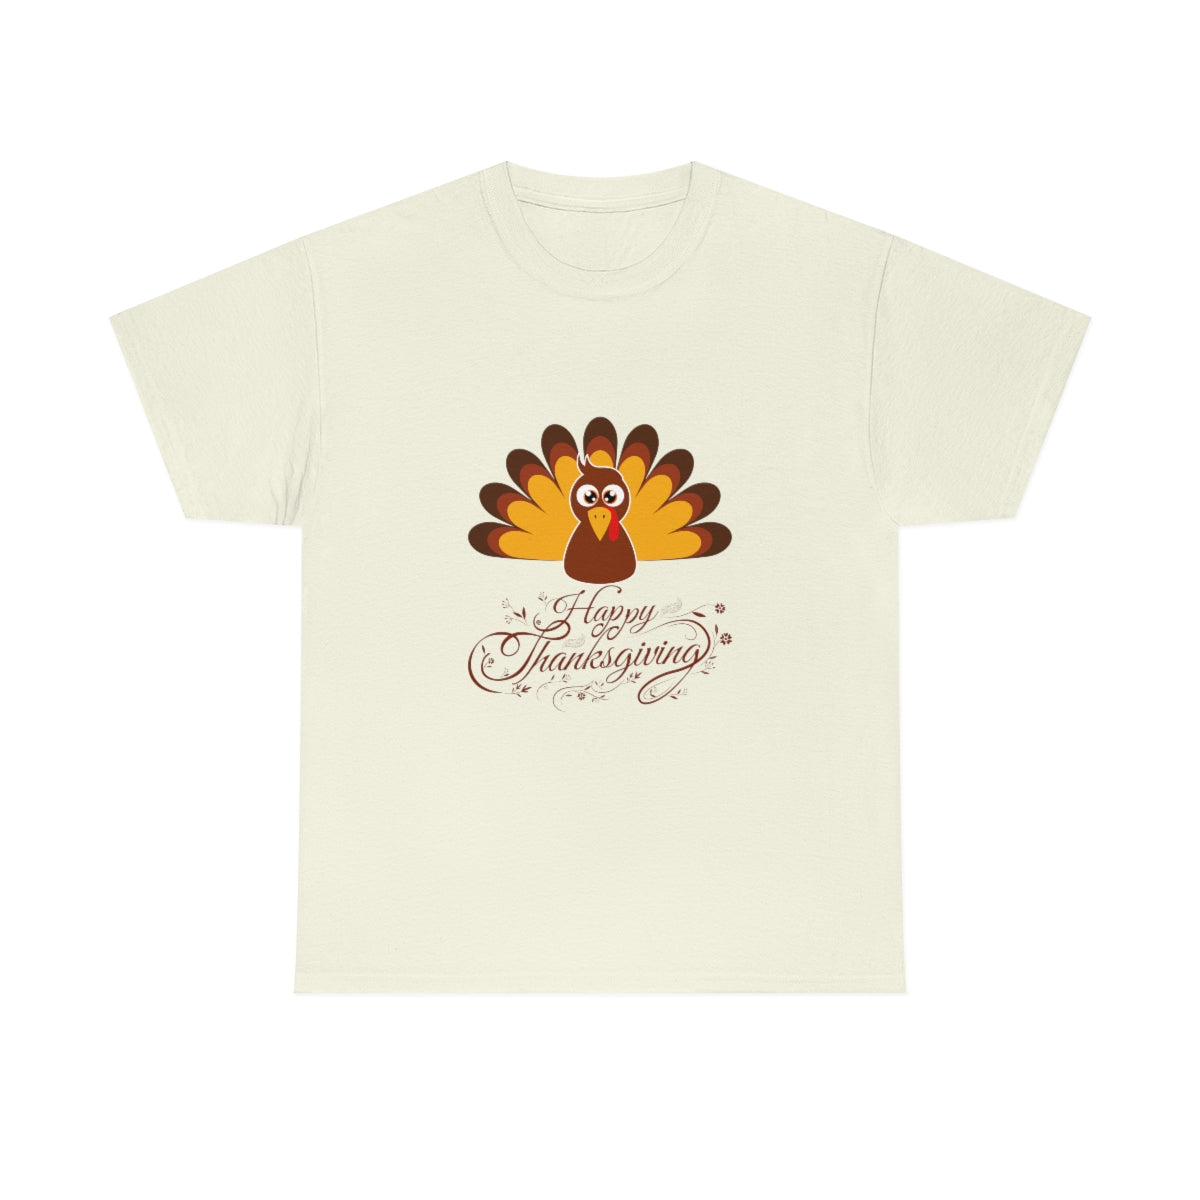 Thanksgiving Tshirt Turkey T-shirt Give Thanks Tee Gratitude Thankful Shirt Adult Fall Tees Autumn Apparel Cute Shirts Women Cute Fall Tee - The Good Life Vibe